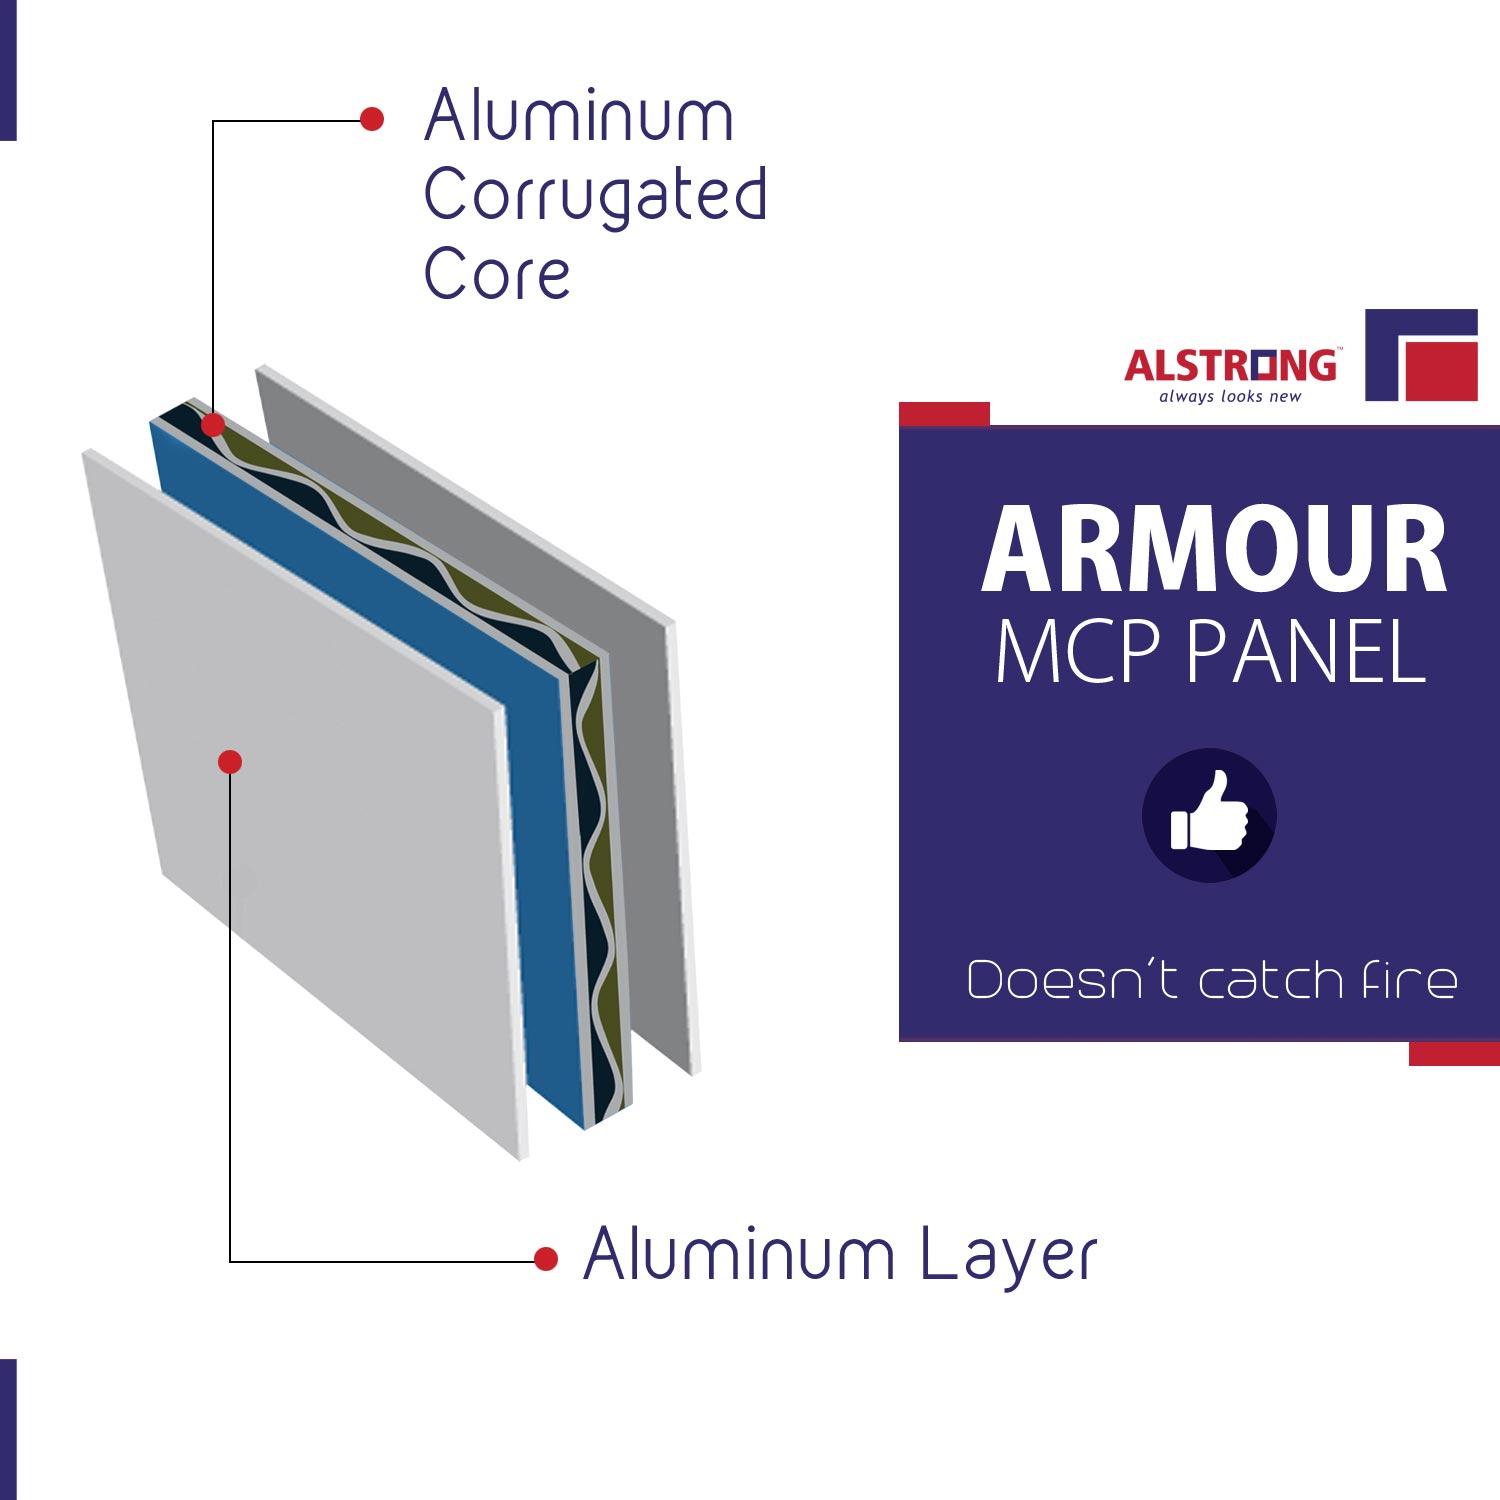 alstrong-armour-aluminum-panels-dont-catch-fire